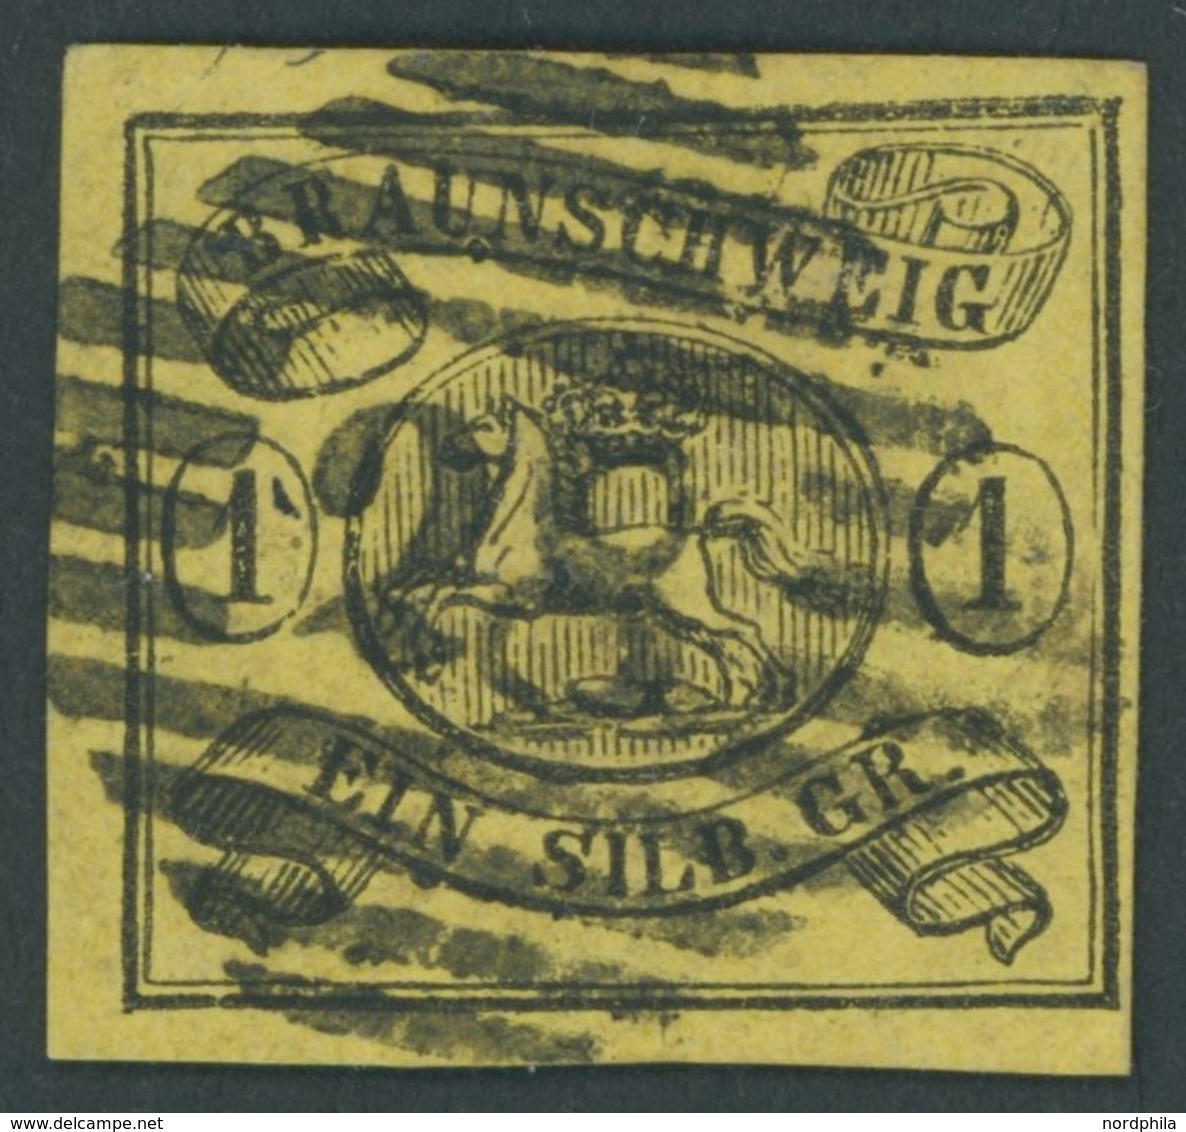 BRAUNSCHWEIG 11A O, 1861, 1 Sgr. Schwarz Auf Lebhaftgraugelb, Zentrischer Nummernstempel 28 (KÖNIGSLUTTER), Pracht - Brunswick